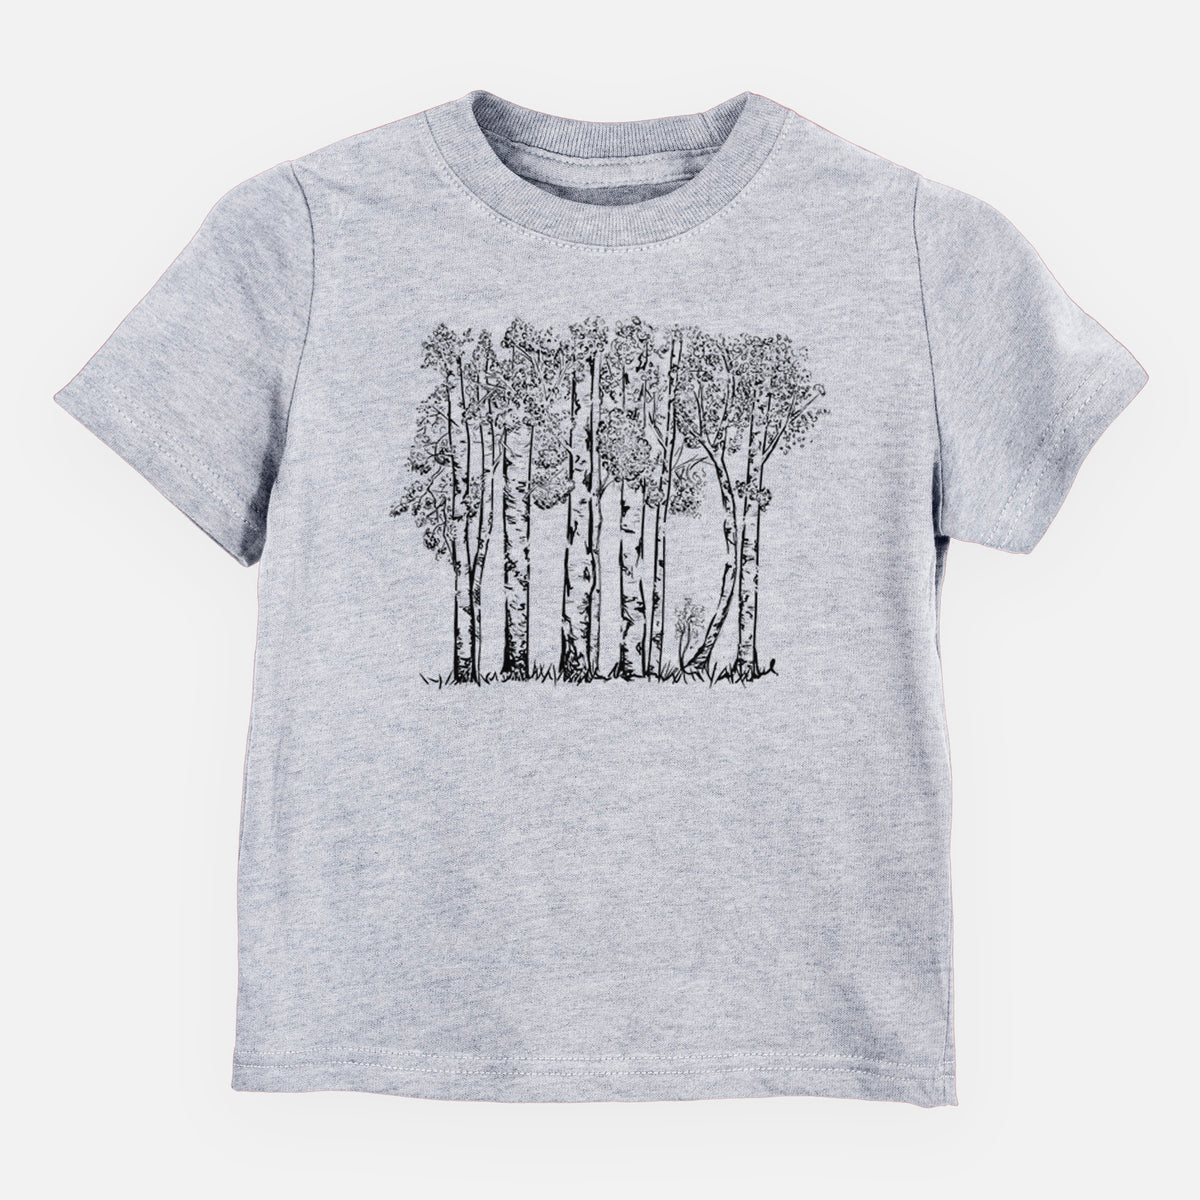 Quaking Aspens - Populus tremuloides - Kids Shirt